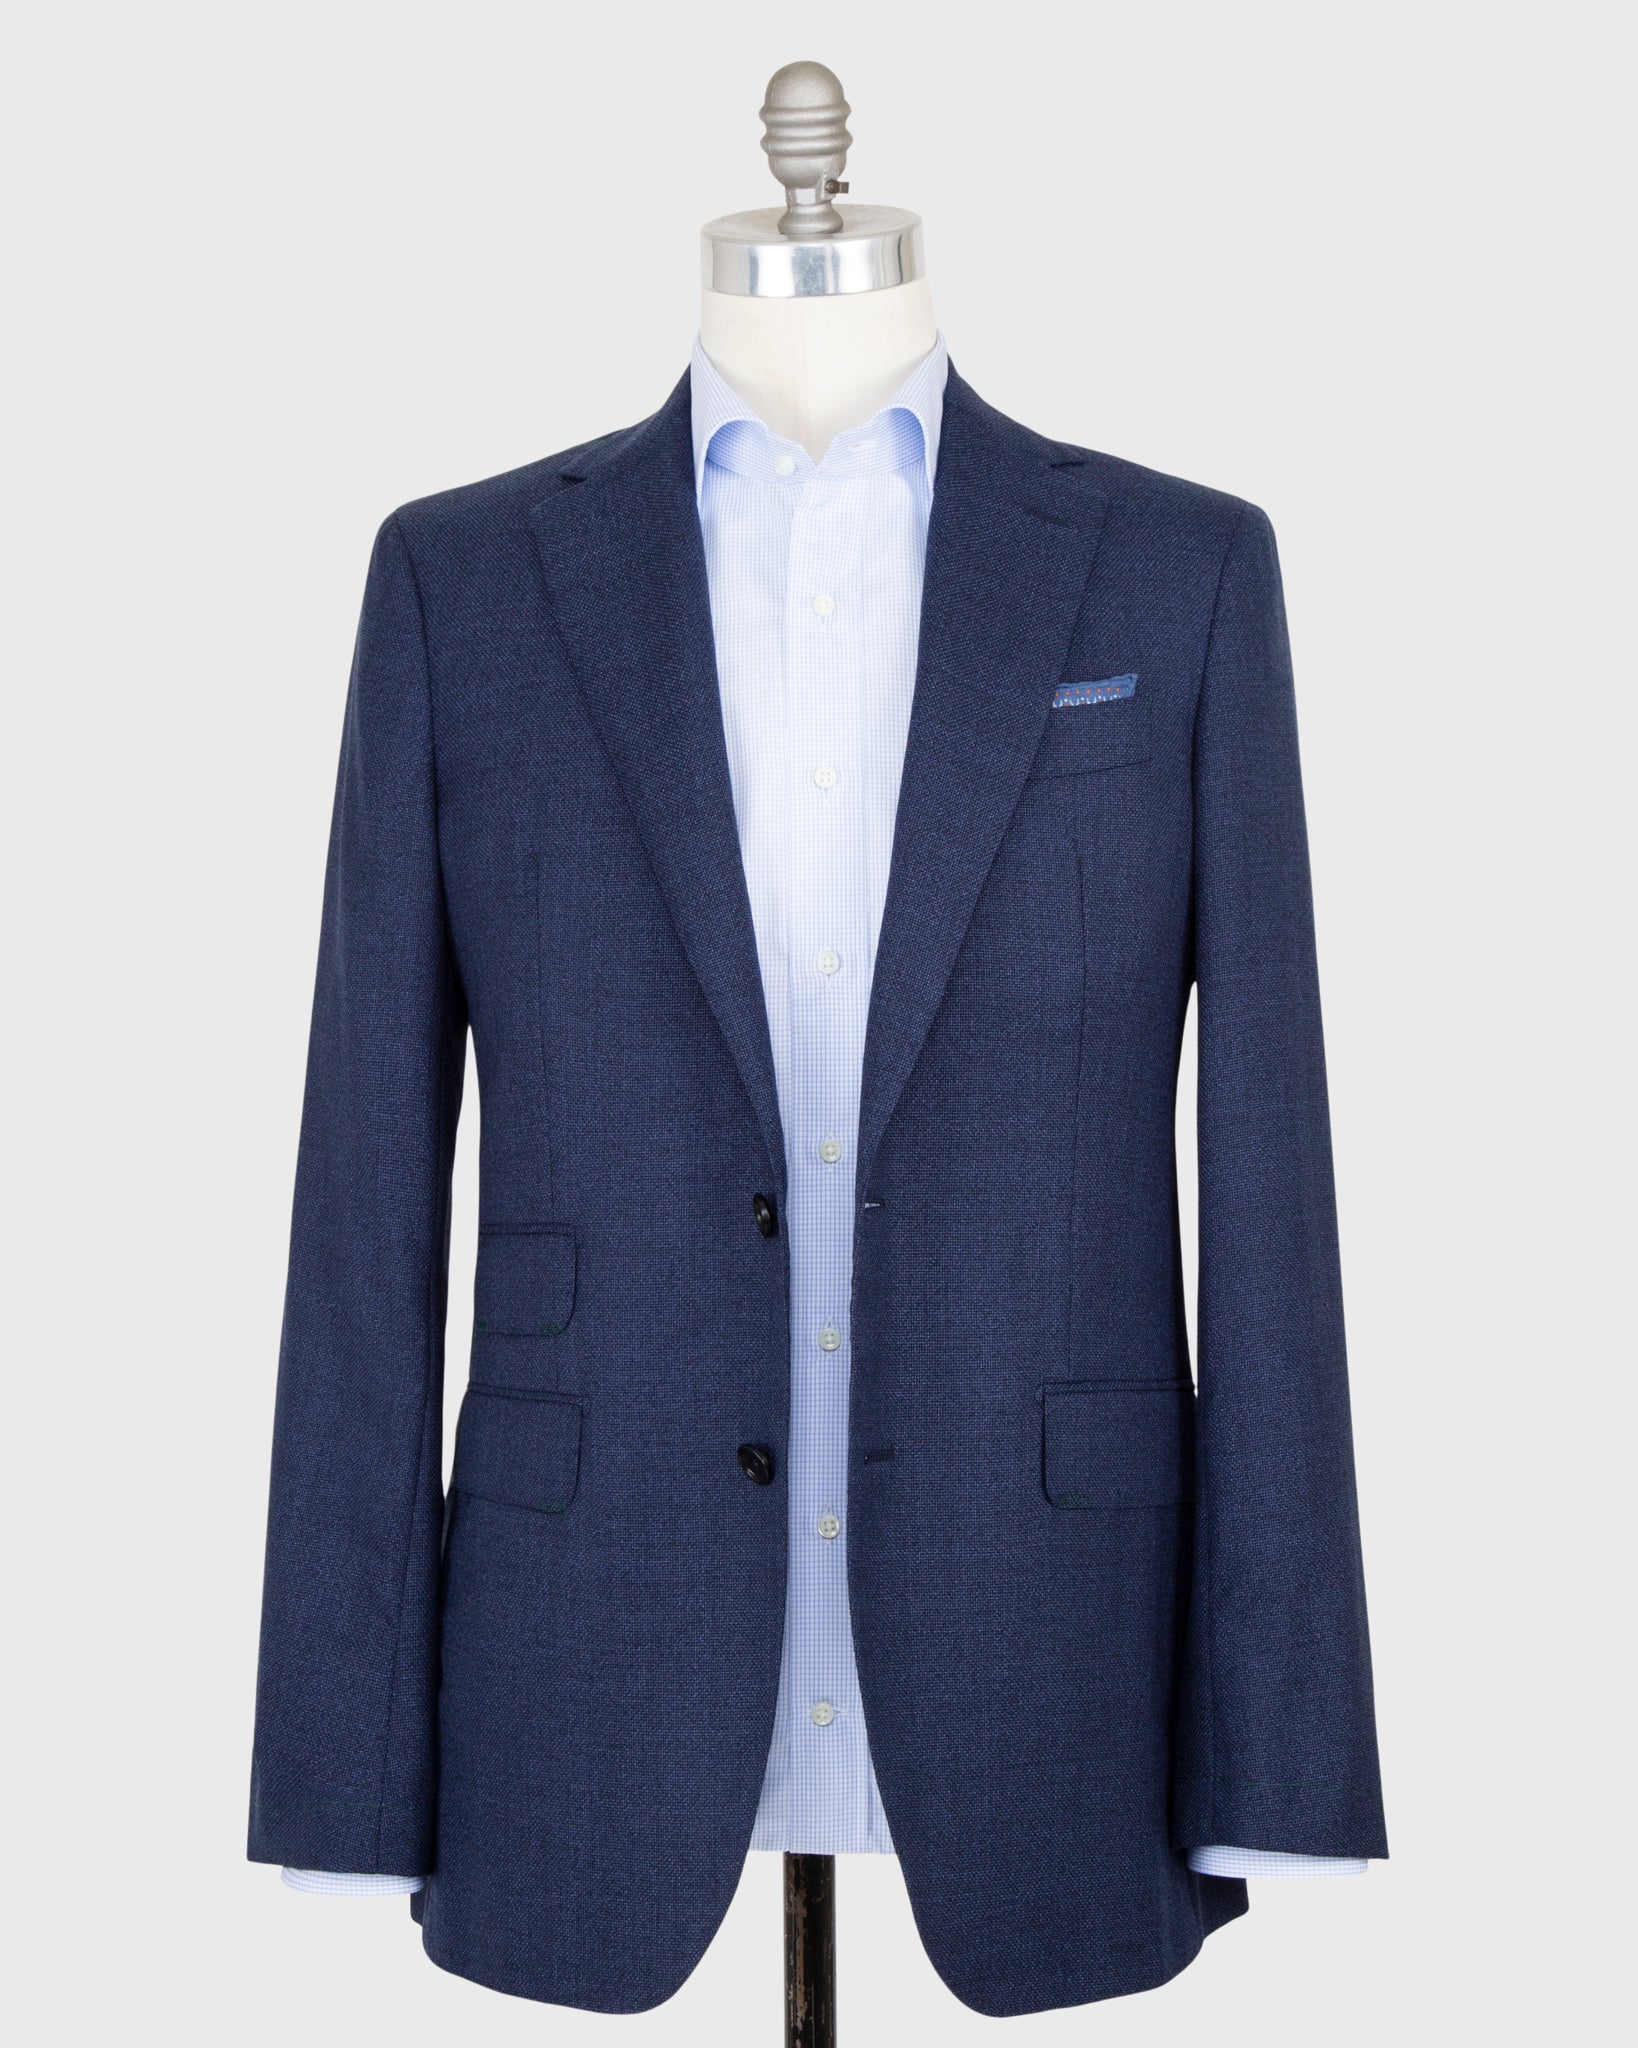 Kincaid No. 2 Jacket in Blue Wool Hopsack